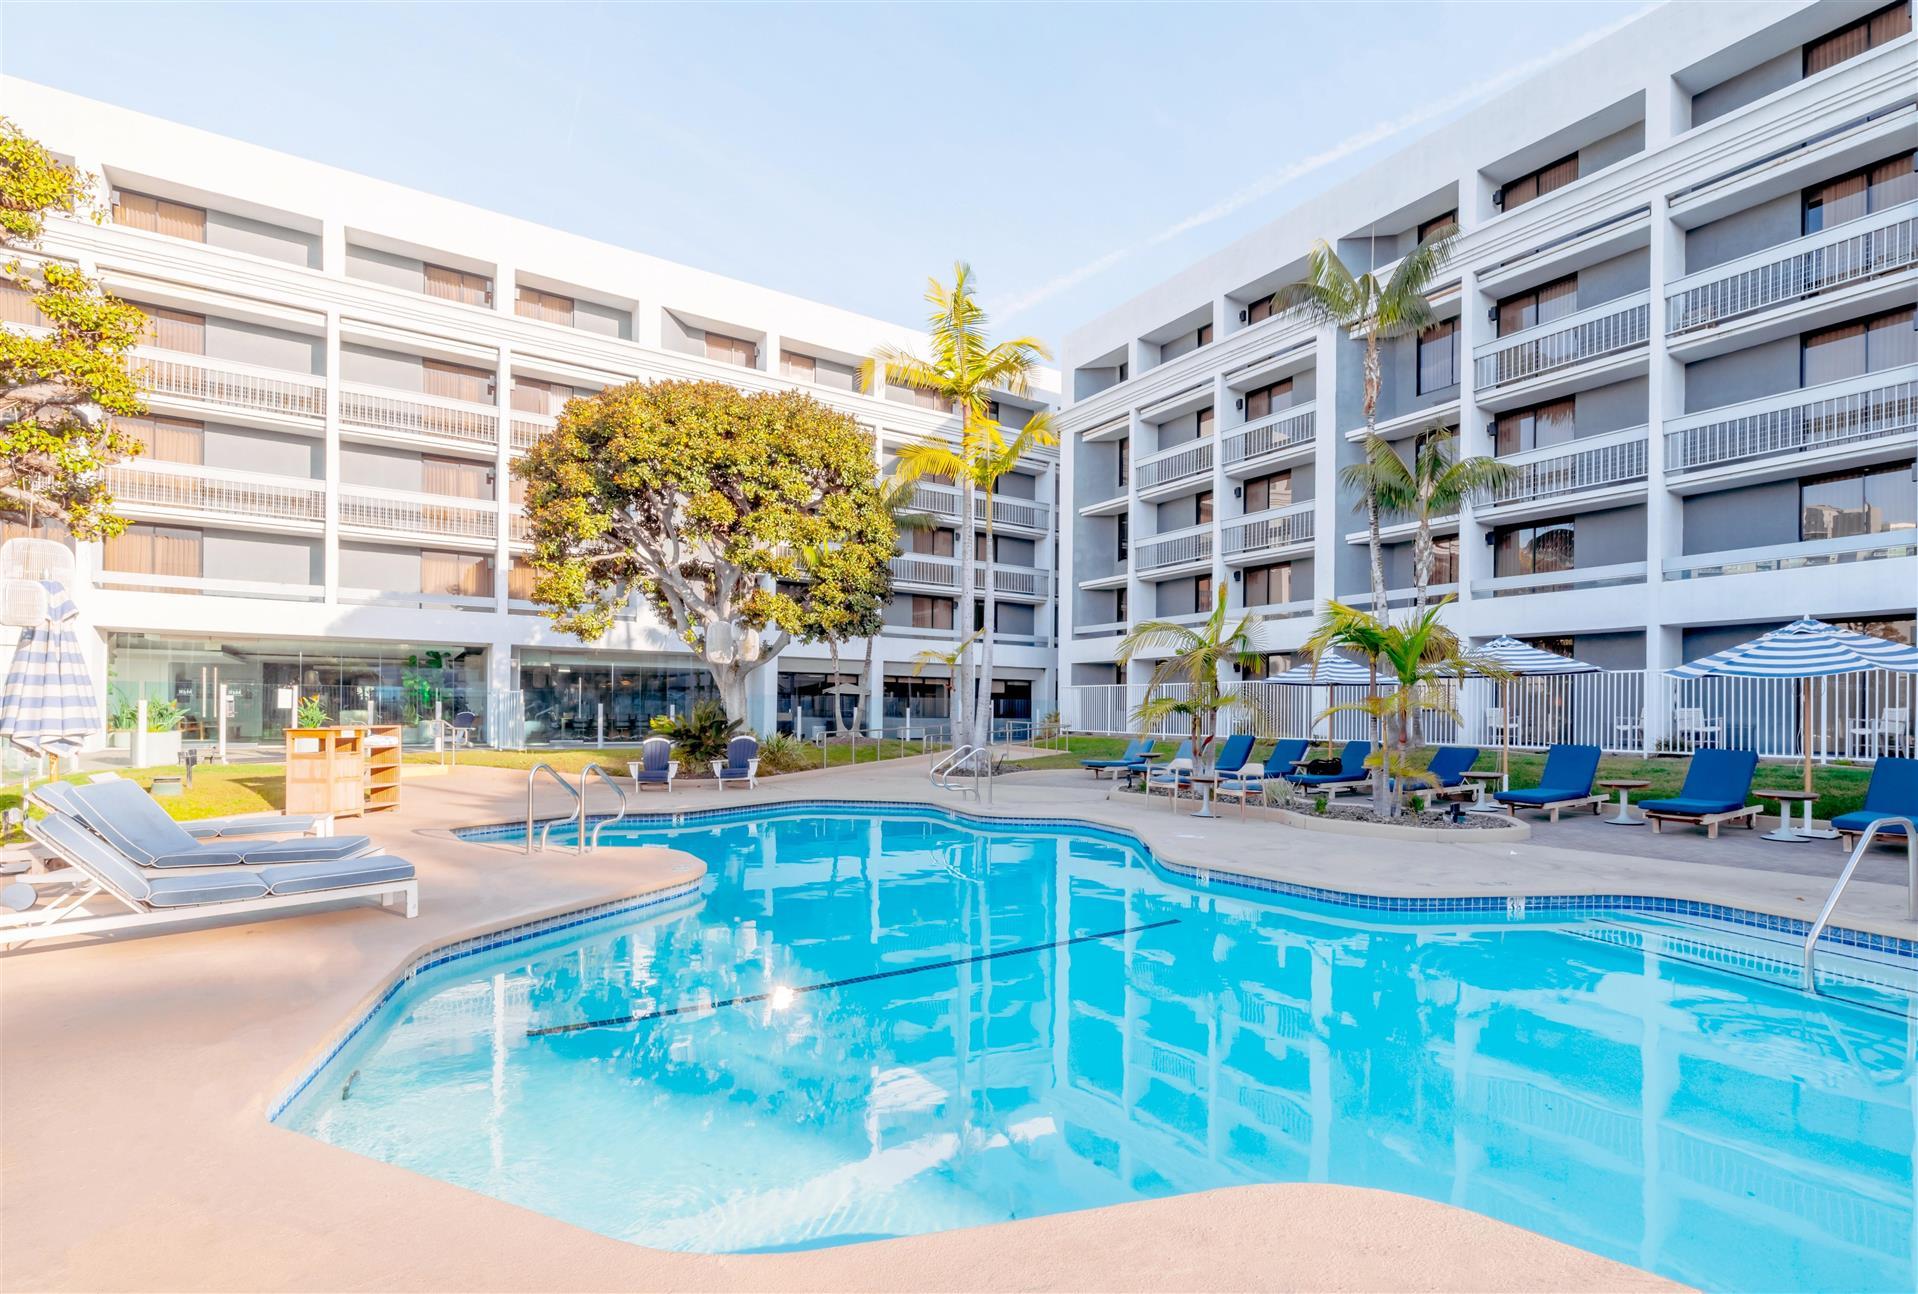 Hotel MdR Marina del Rey - a DoubleTree by Hilton in Marina del Rey, CA